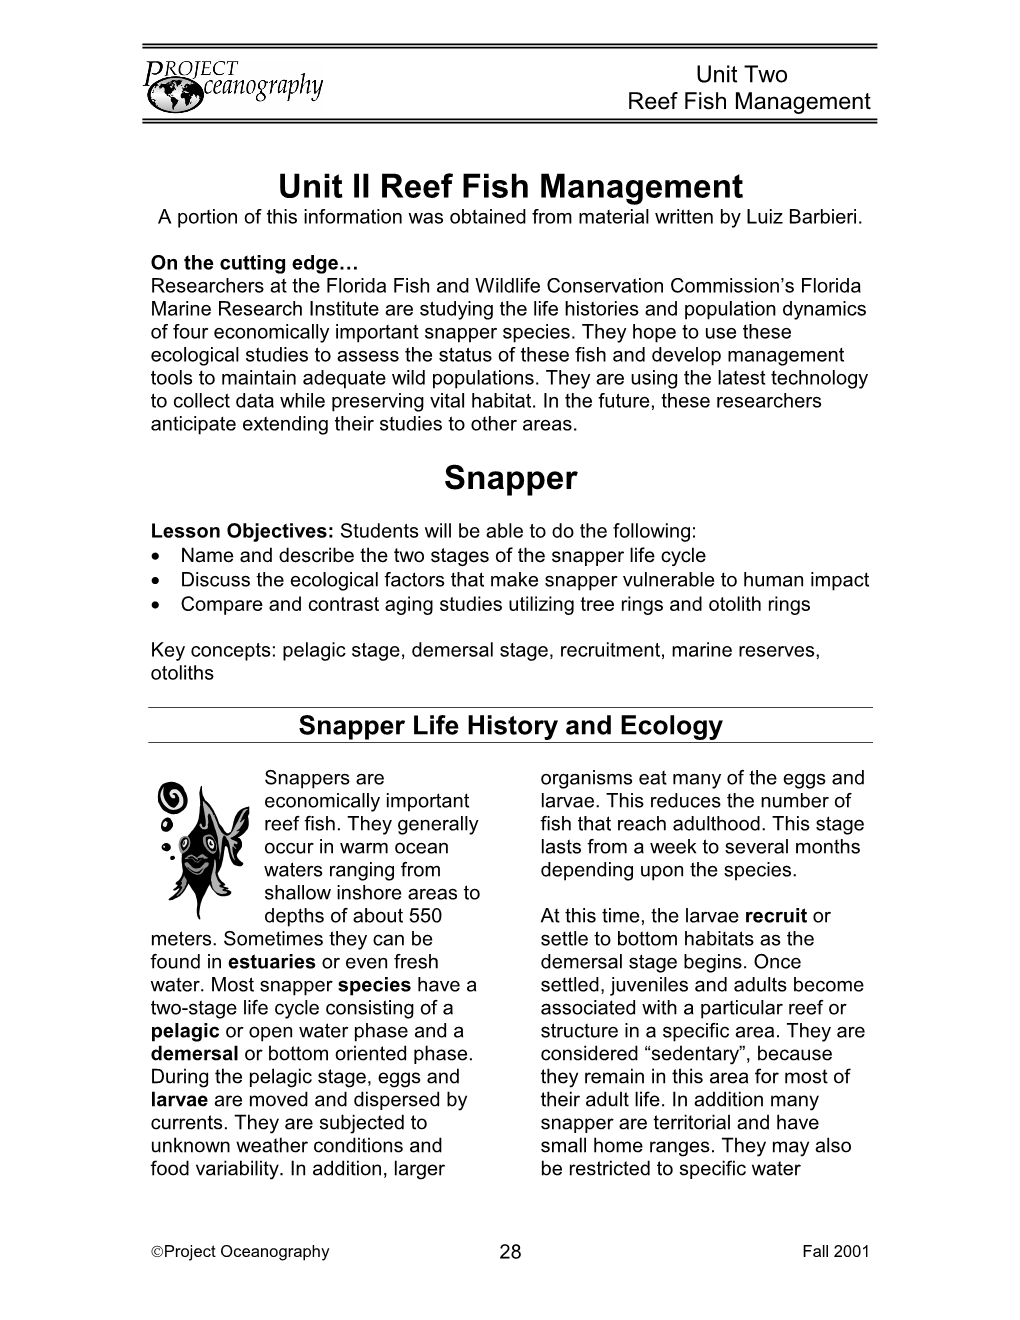 Unit II Reef Fish Management Snapper